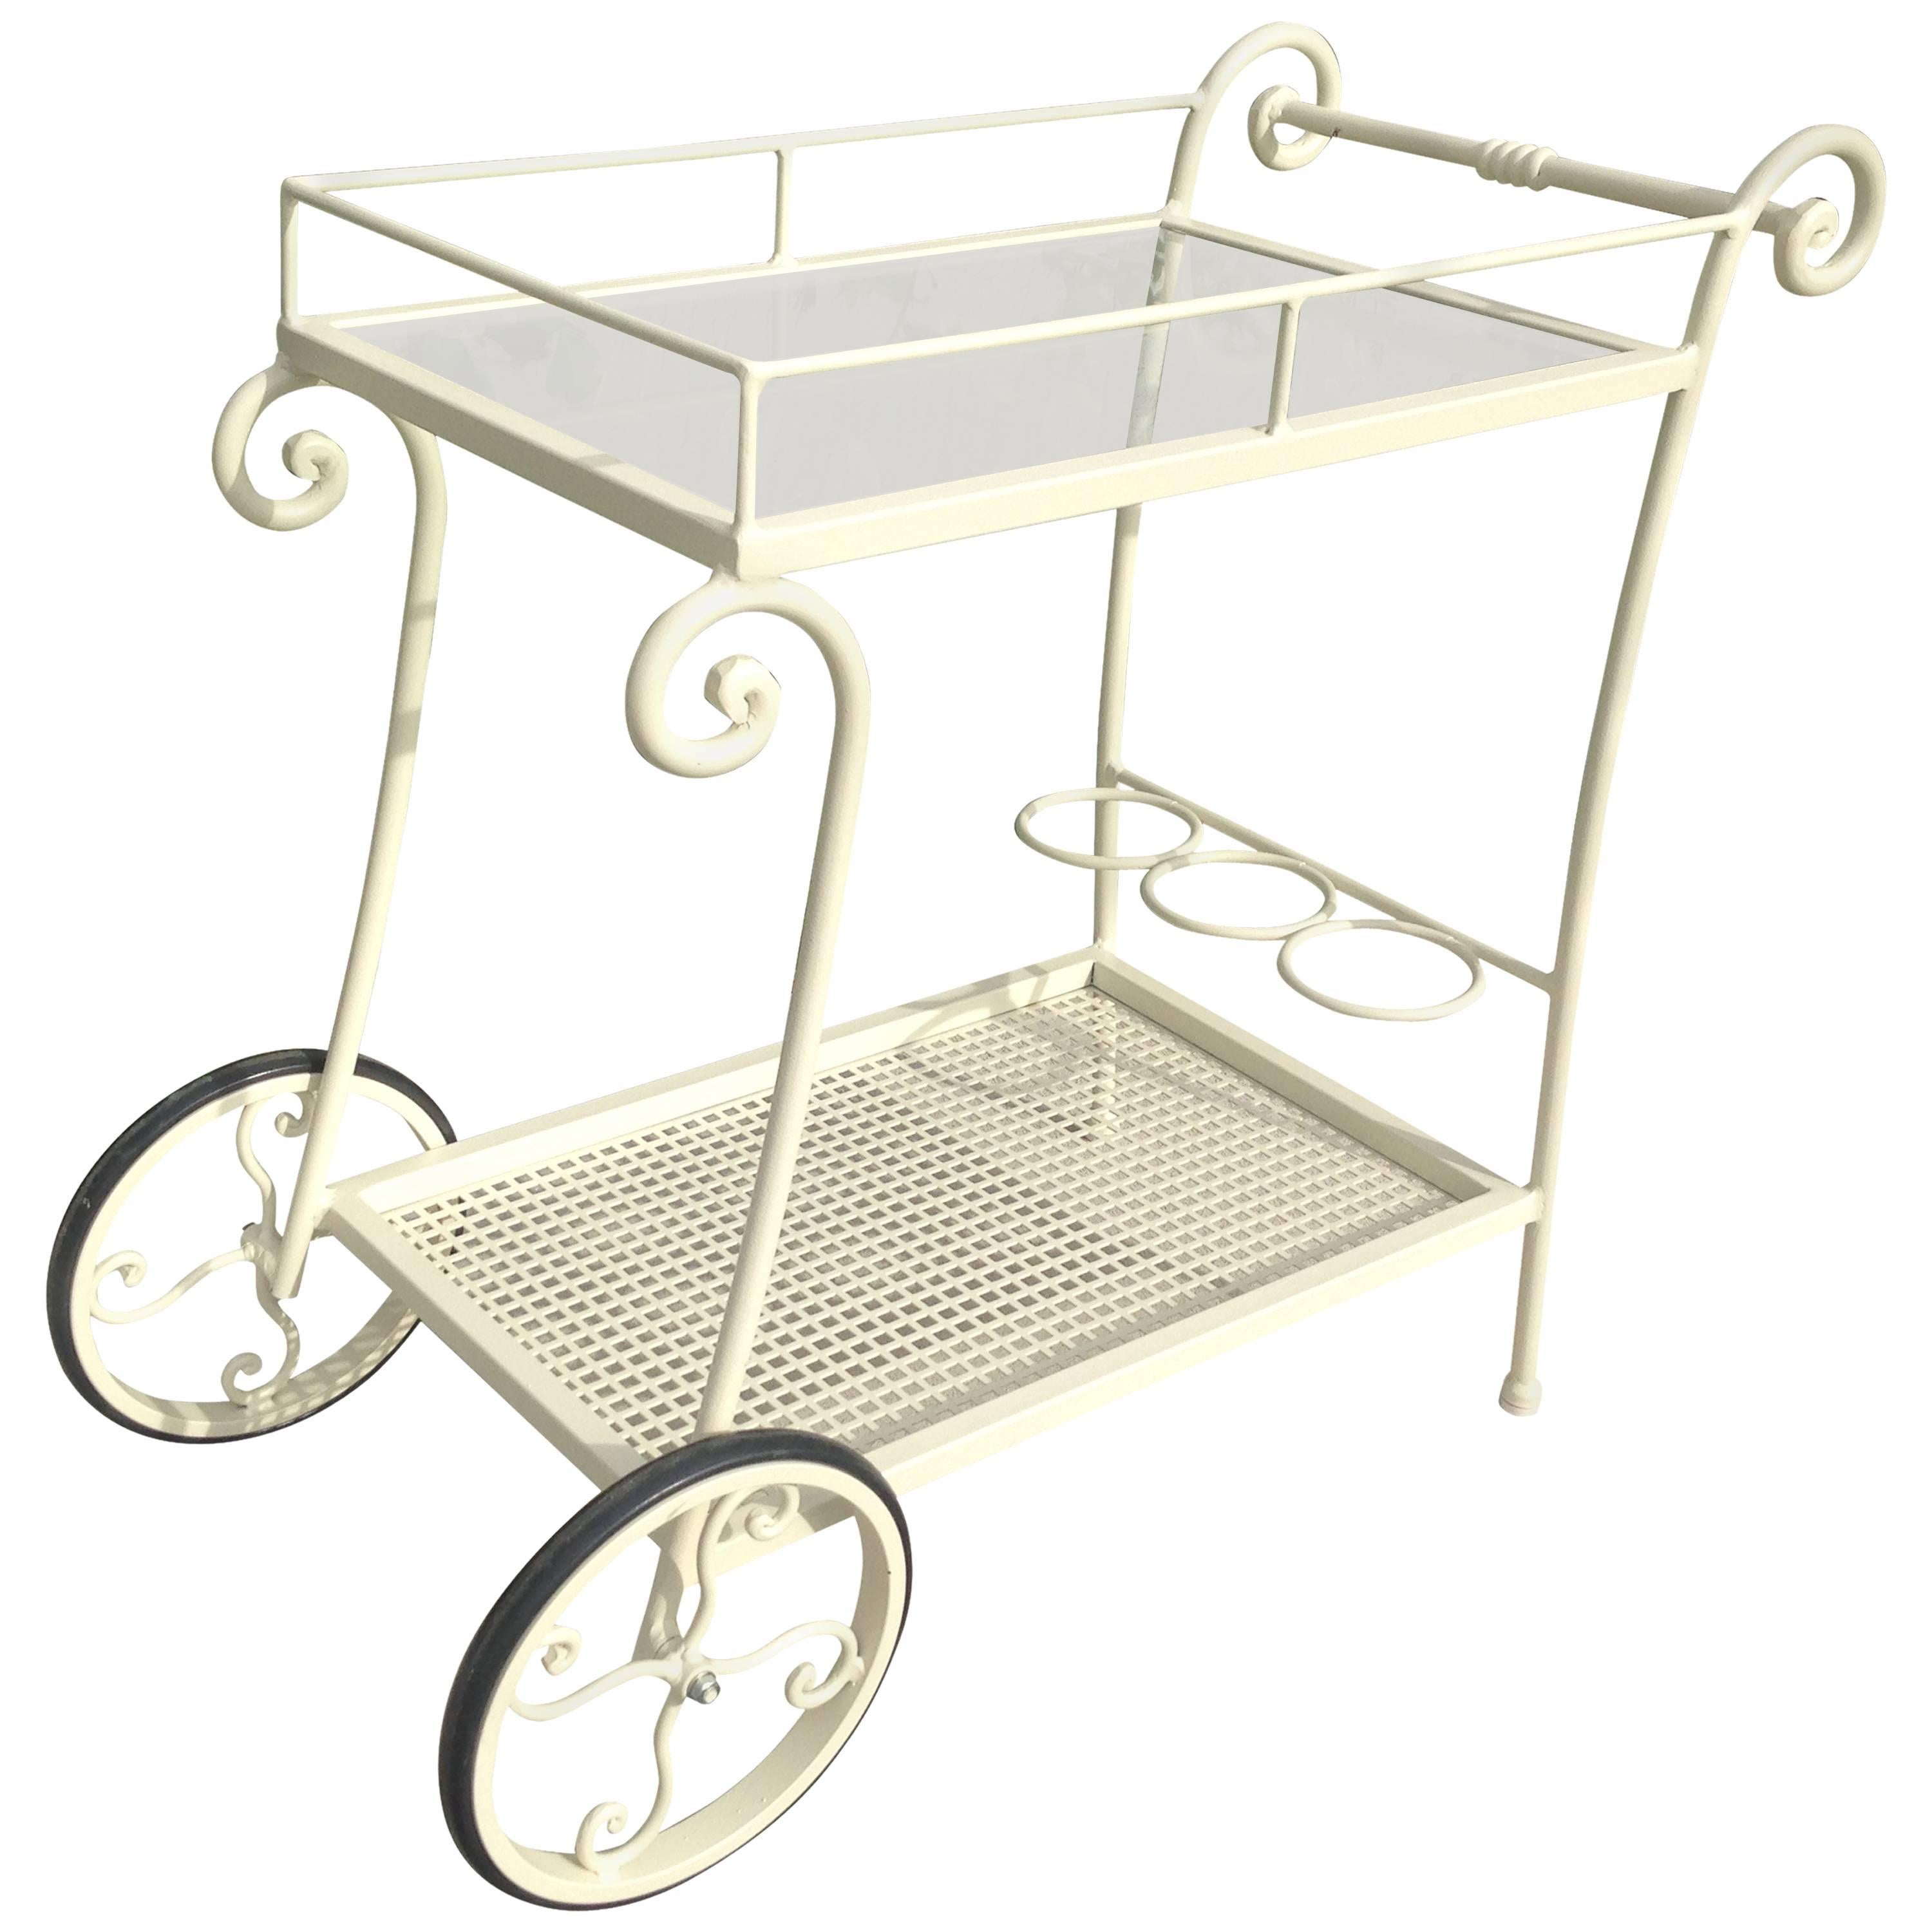 Wrought Iron Tea Cart.Garden furniture